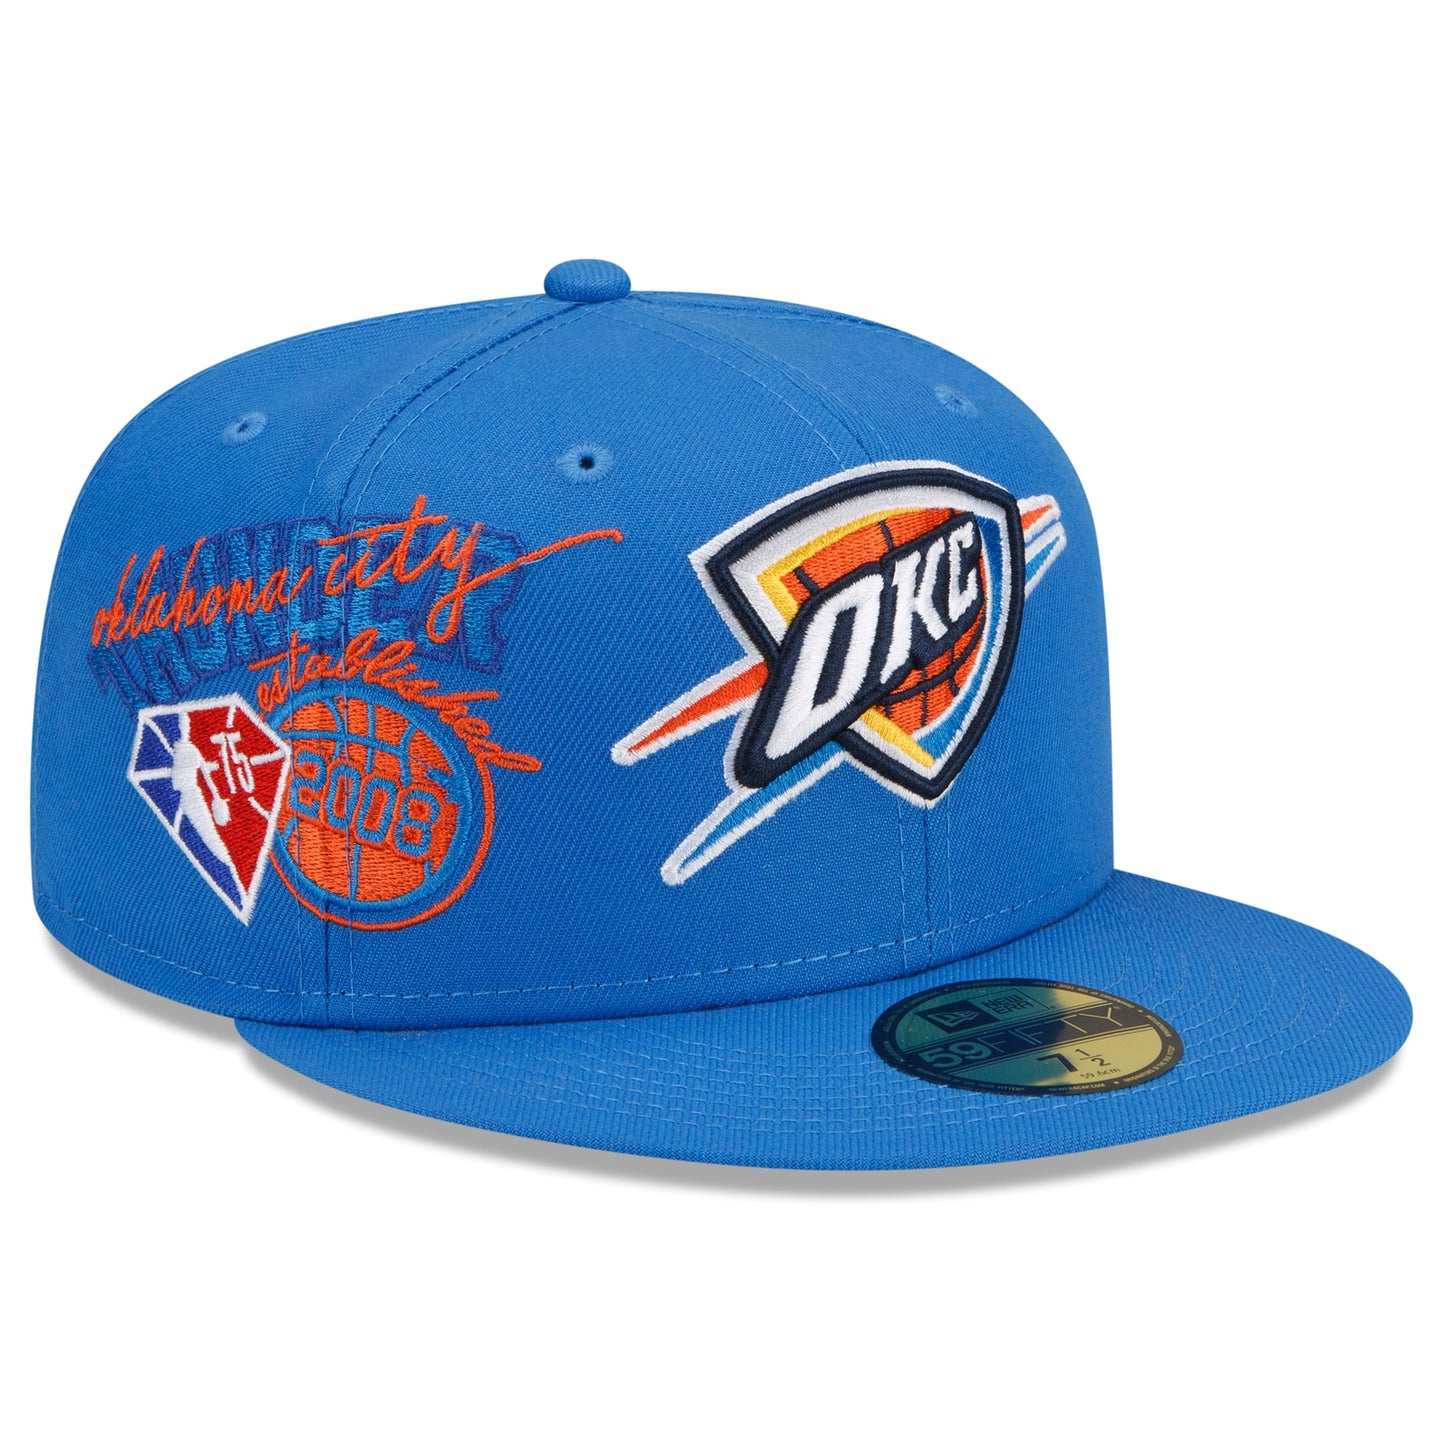 Oklahoma City Thunder New Era Back Half 59FIFTY Fitted Hat - Blue